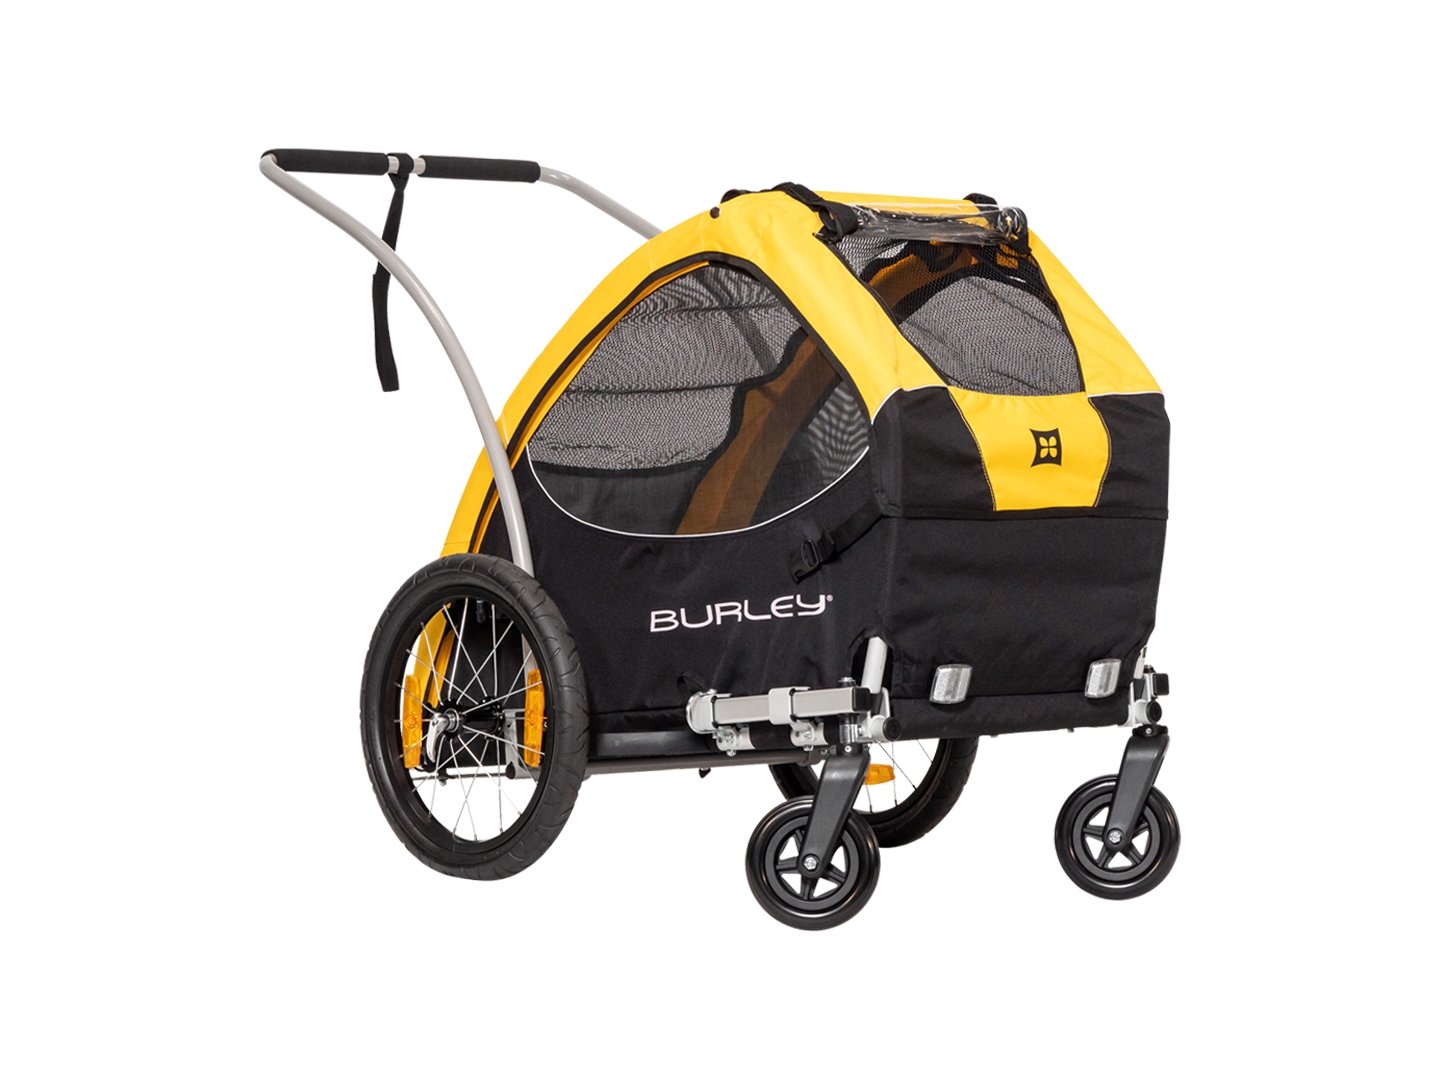 burley tail wagon stroller kit